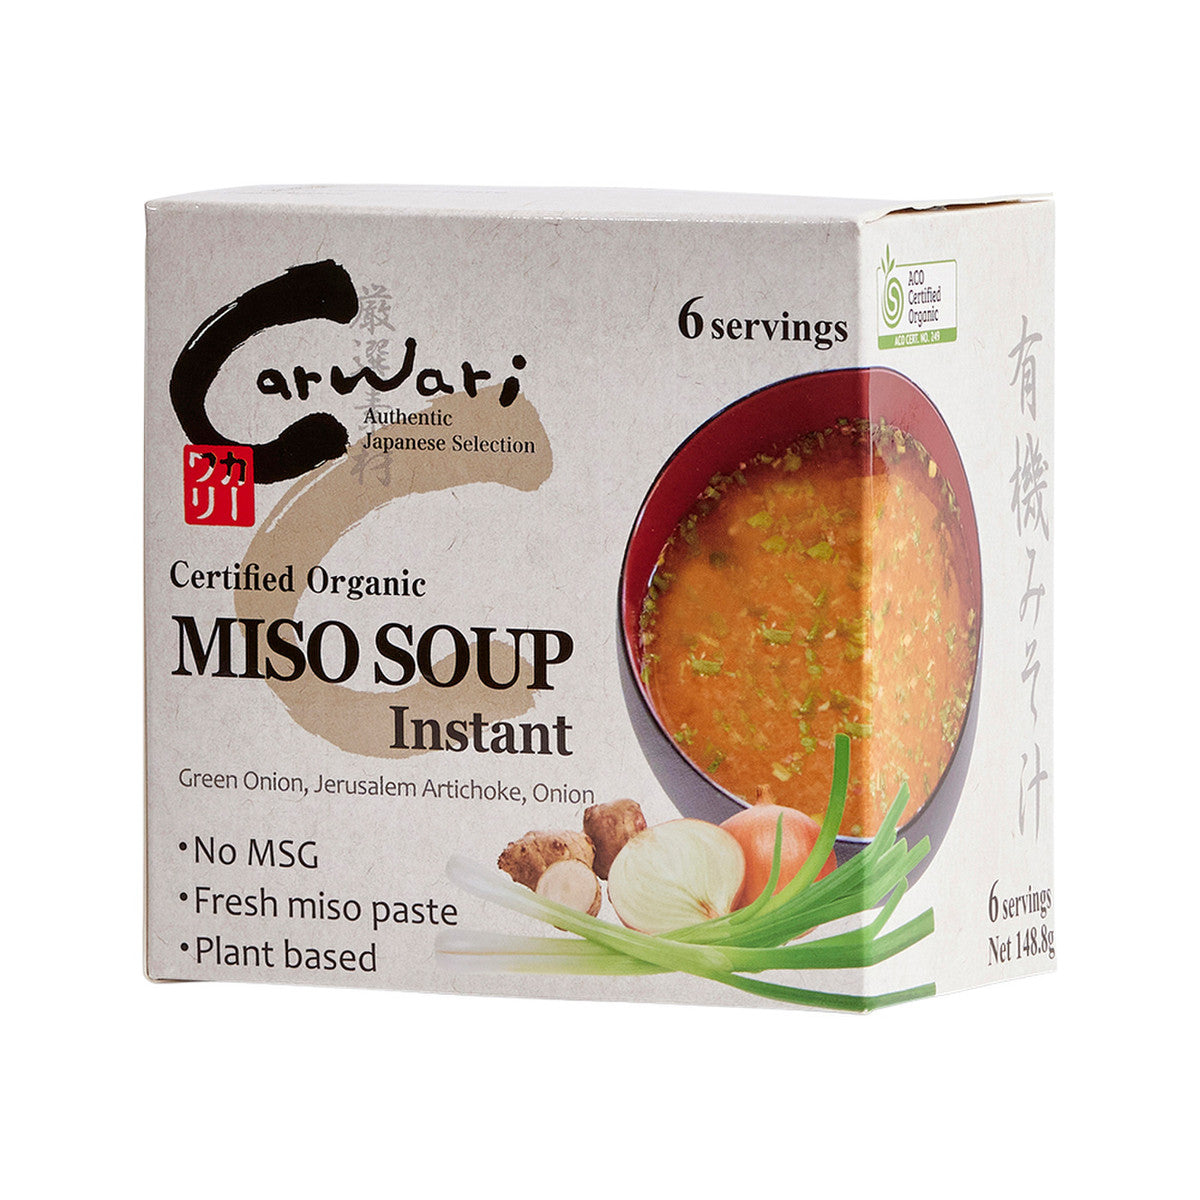 Carwari - Organic Miso Soup Instant